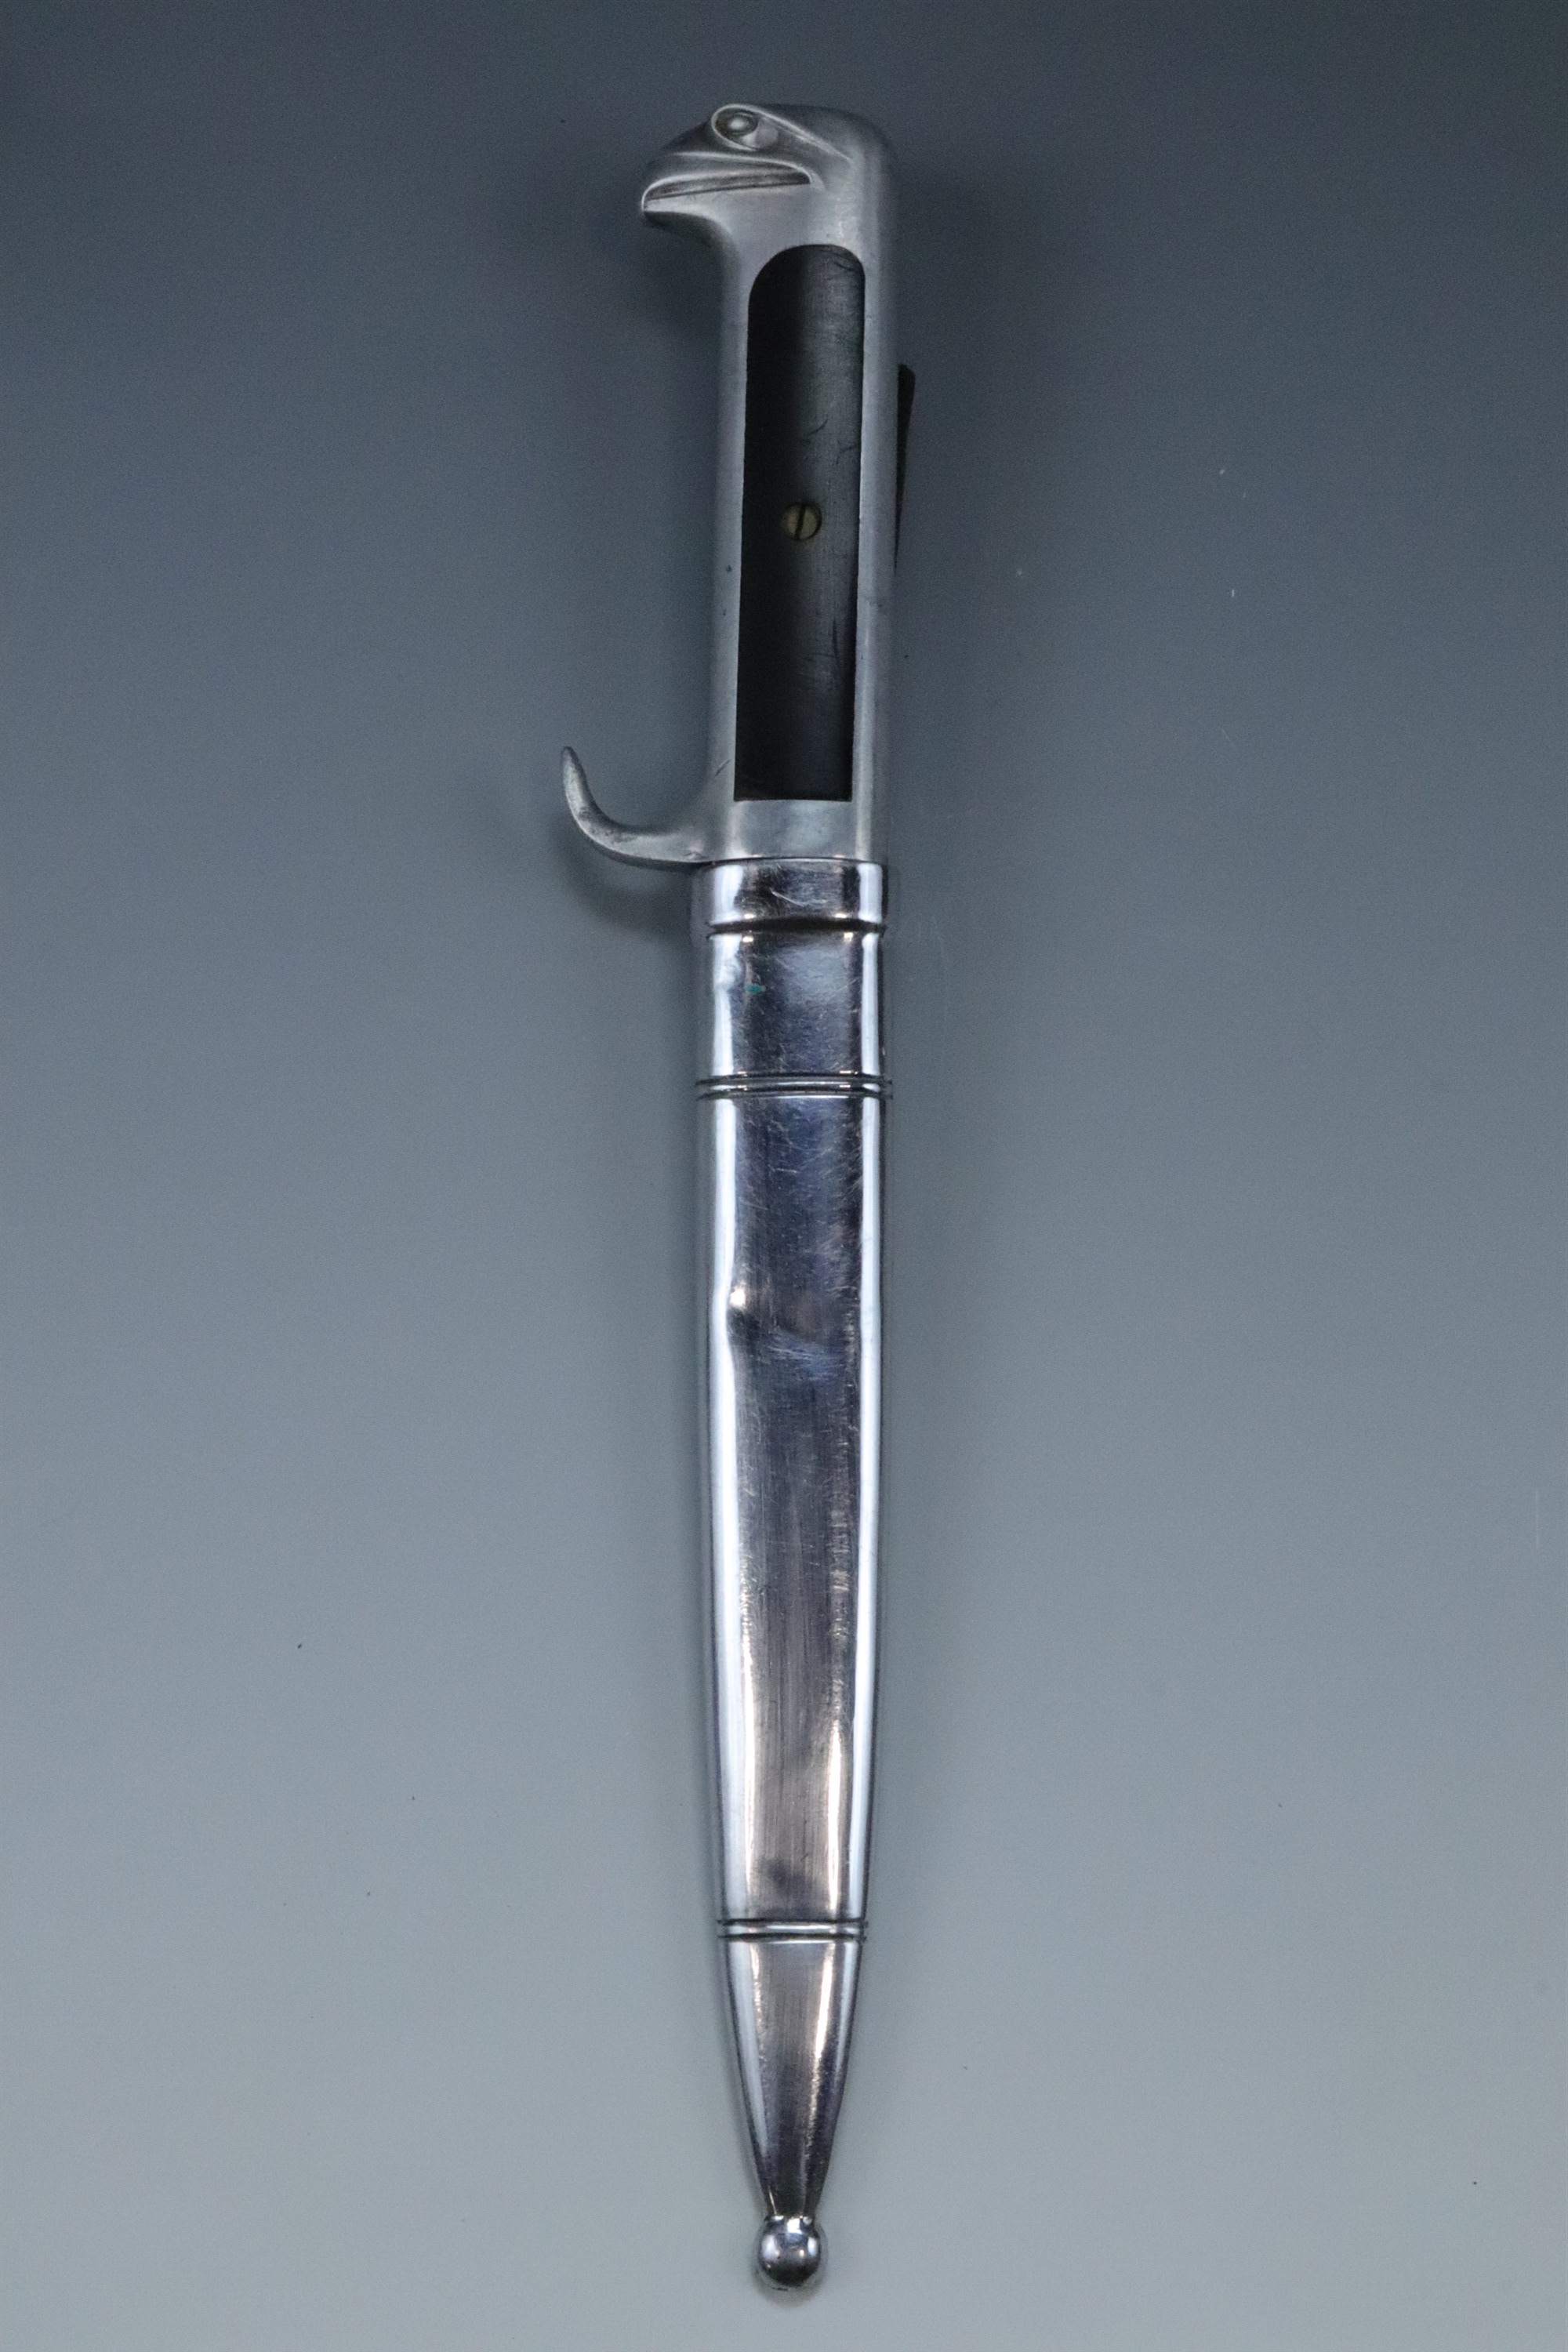 An Italian MVSN officer's dagger, 1930s - 1940s